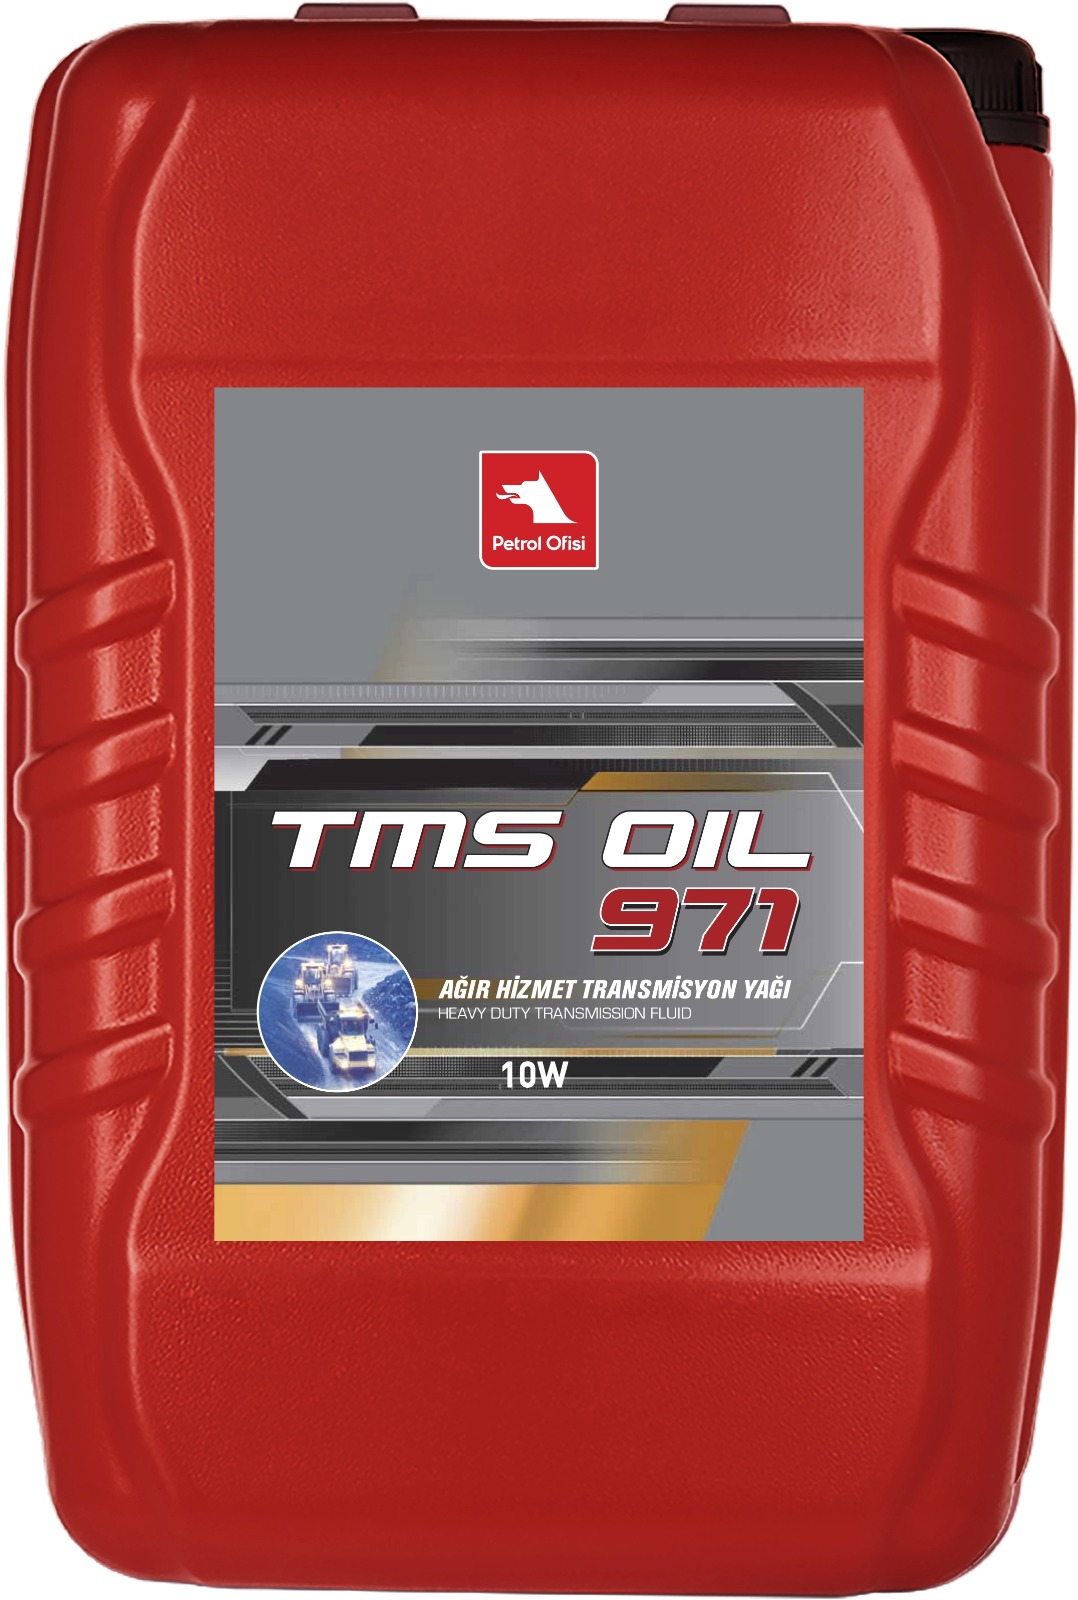 Petrol Ofisi Maxitrak TMS Oil 971 (17.5кг) Масло для спецтехники